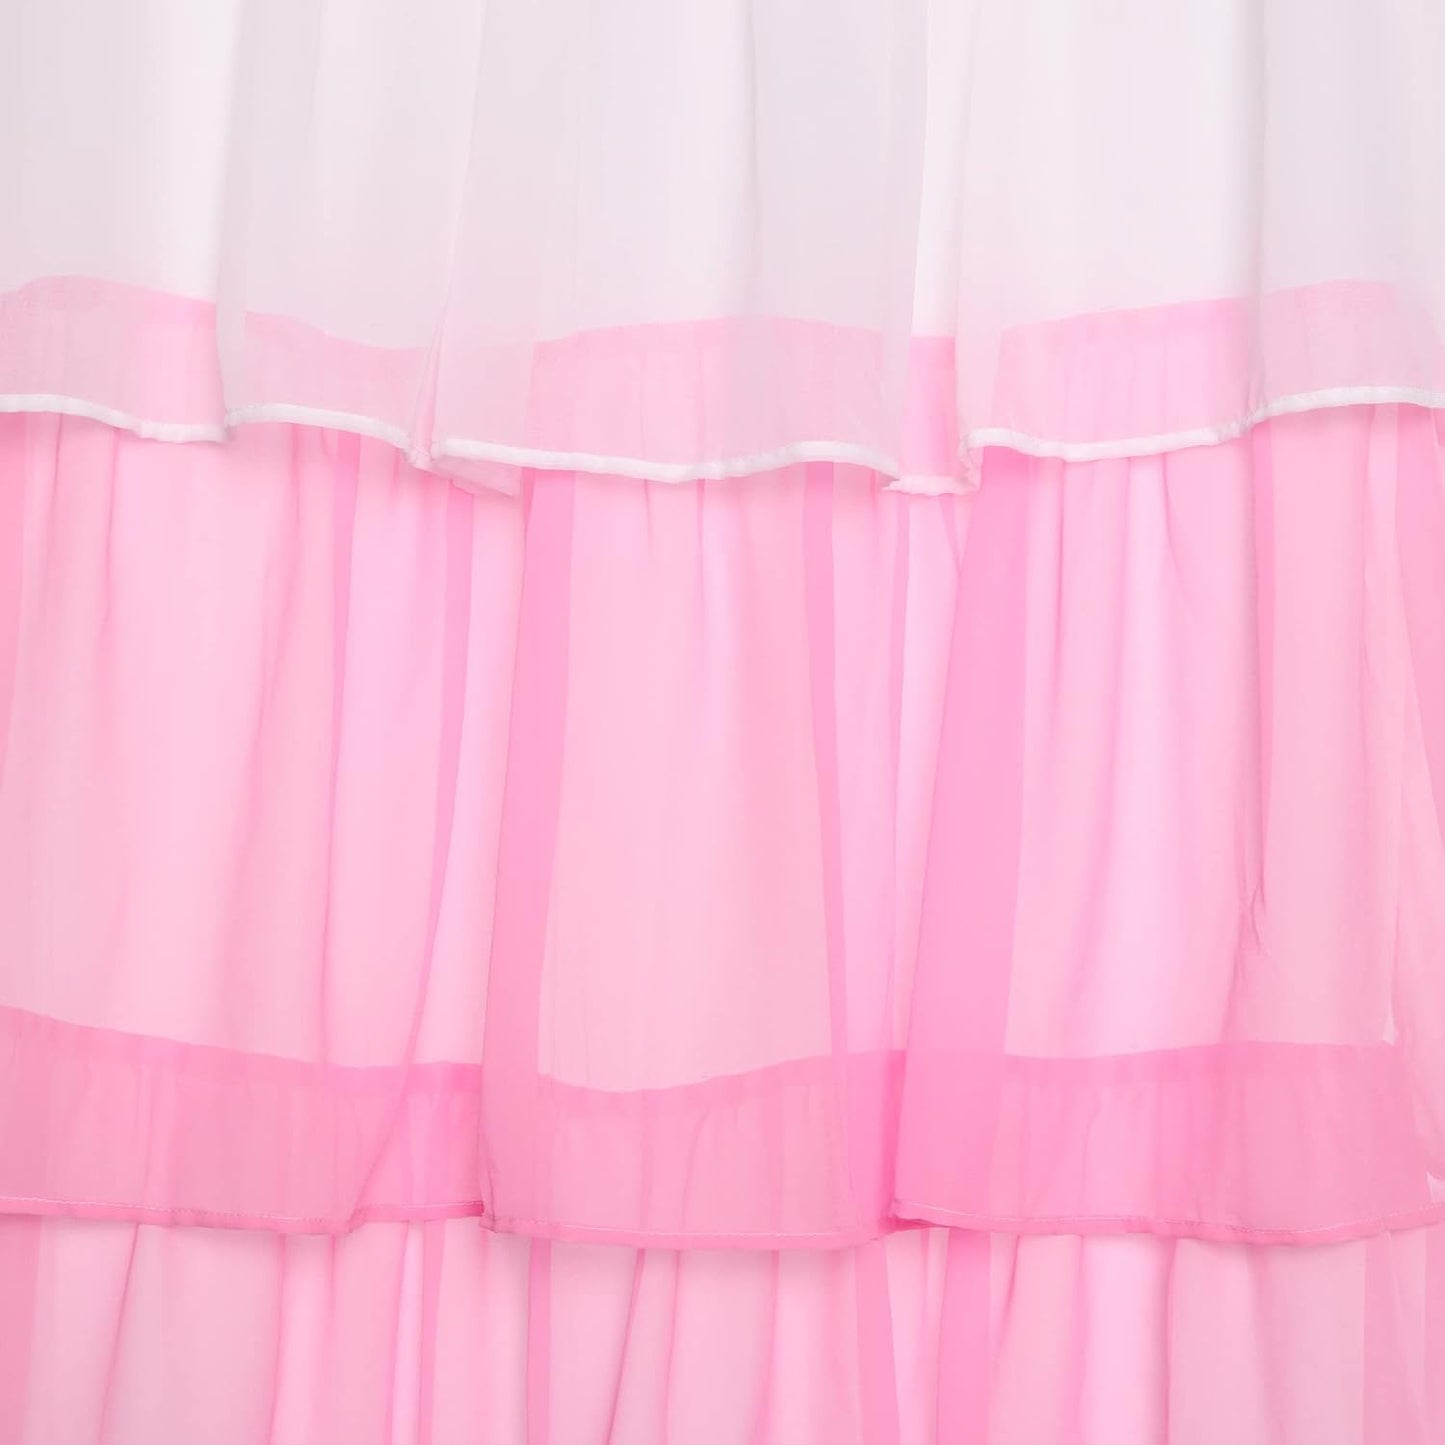 Blush Full Ruffle Curtains